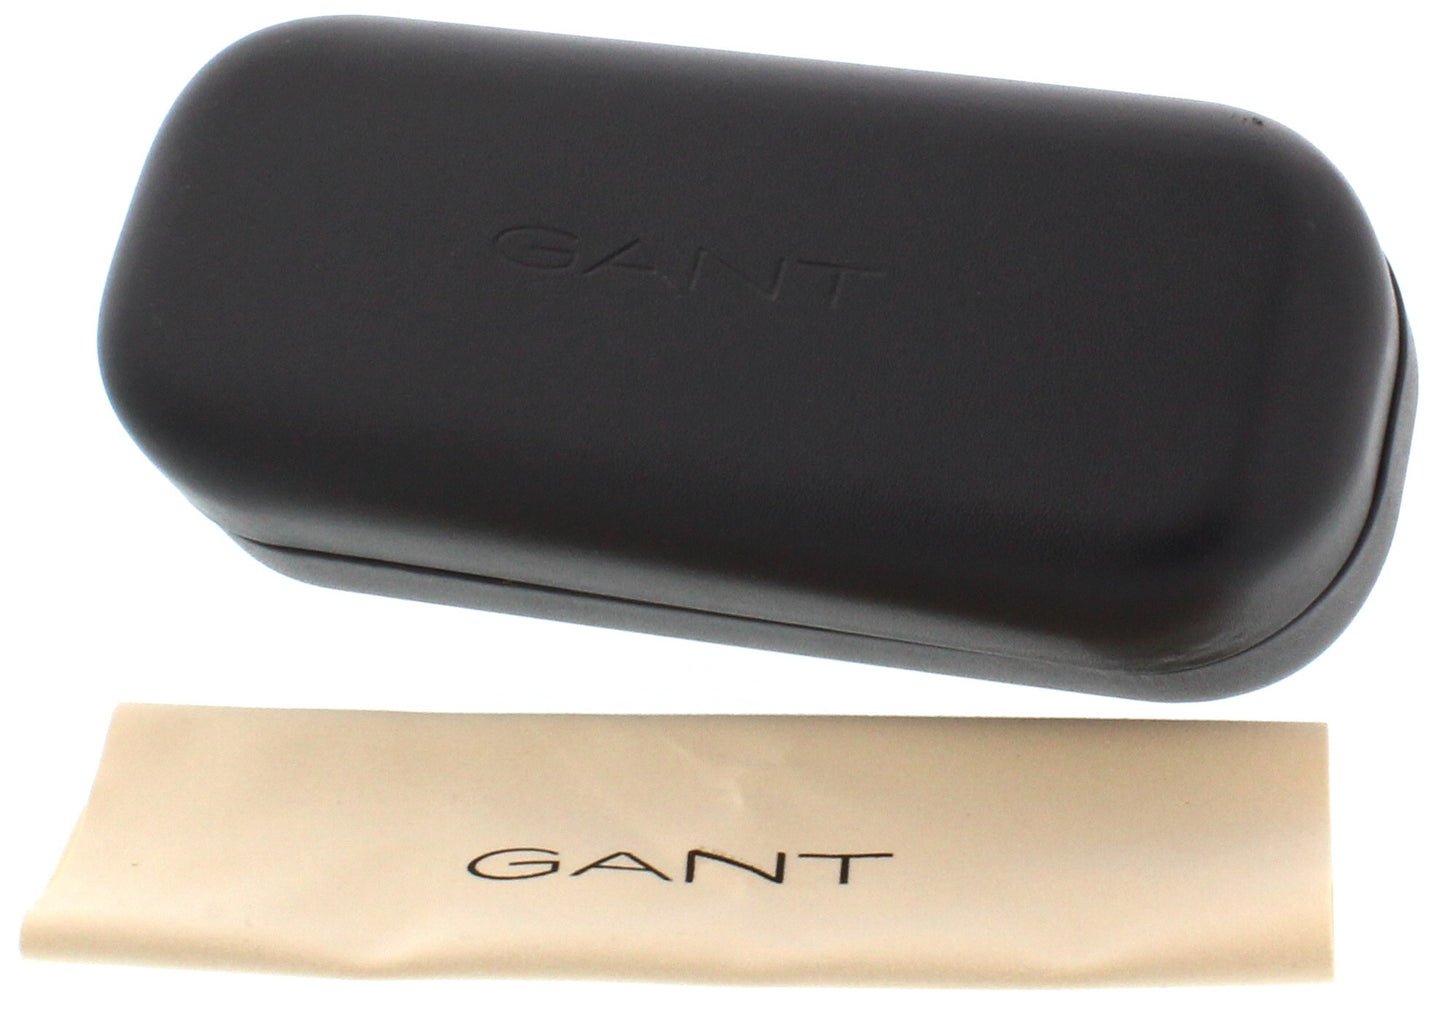 GANT GA3259-090 52mm New Eyeglasses